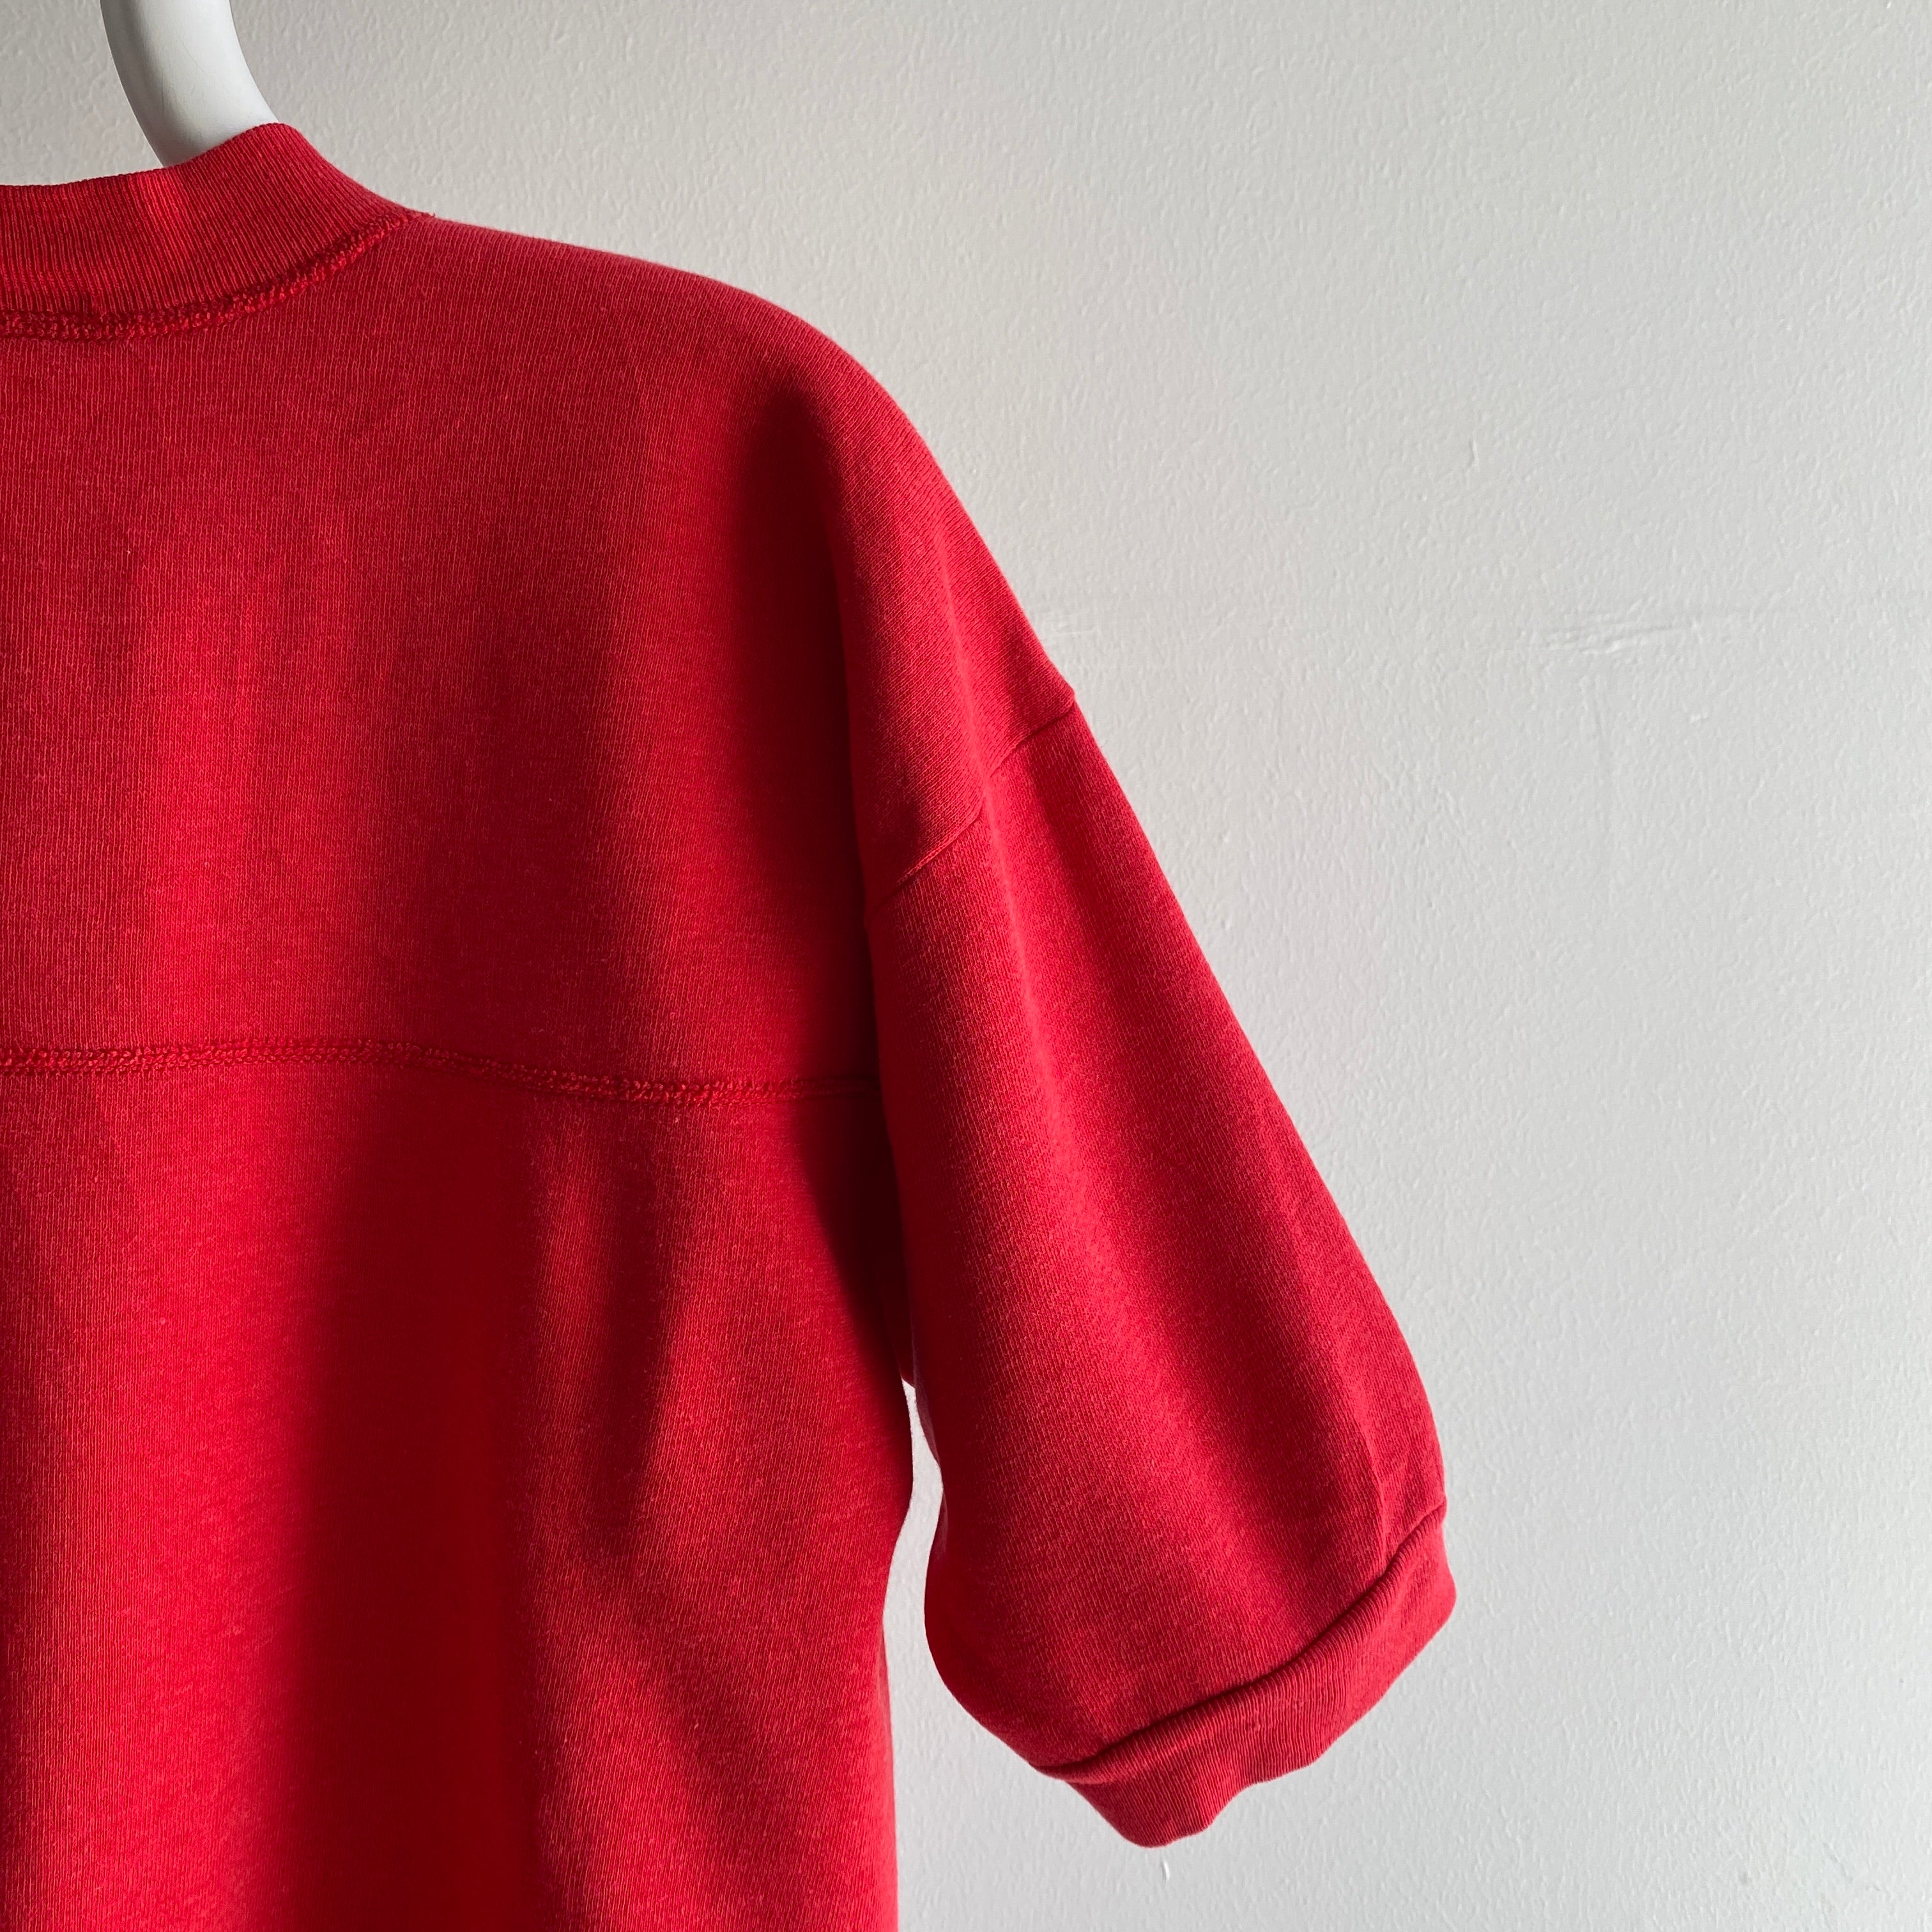 1980/90s Bassett Walker Red Henley Short Sleeve Sweatshirt AKA Warm Up